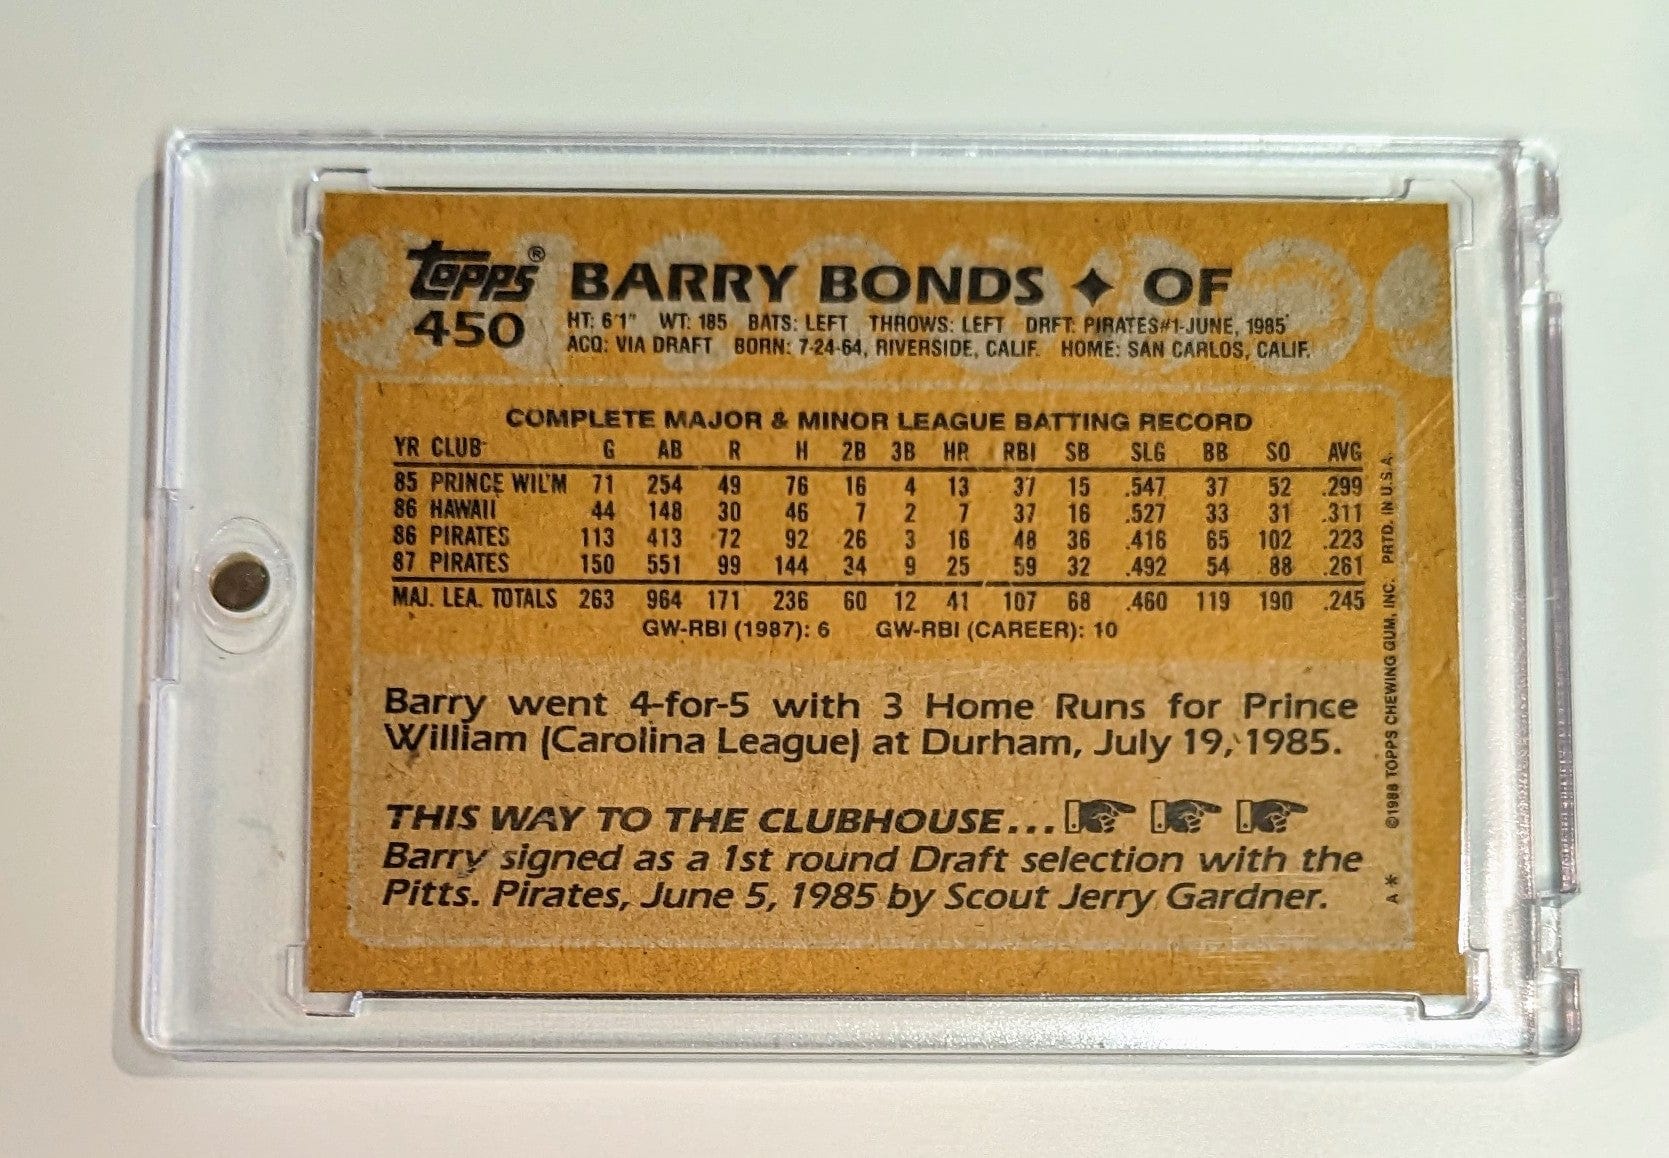 FIINR Baseball Card 1988 Topps Barry Bonds Baseball Card #450 - Mint Condition